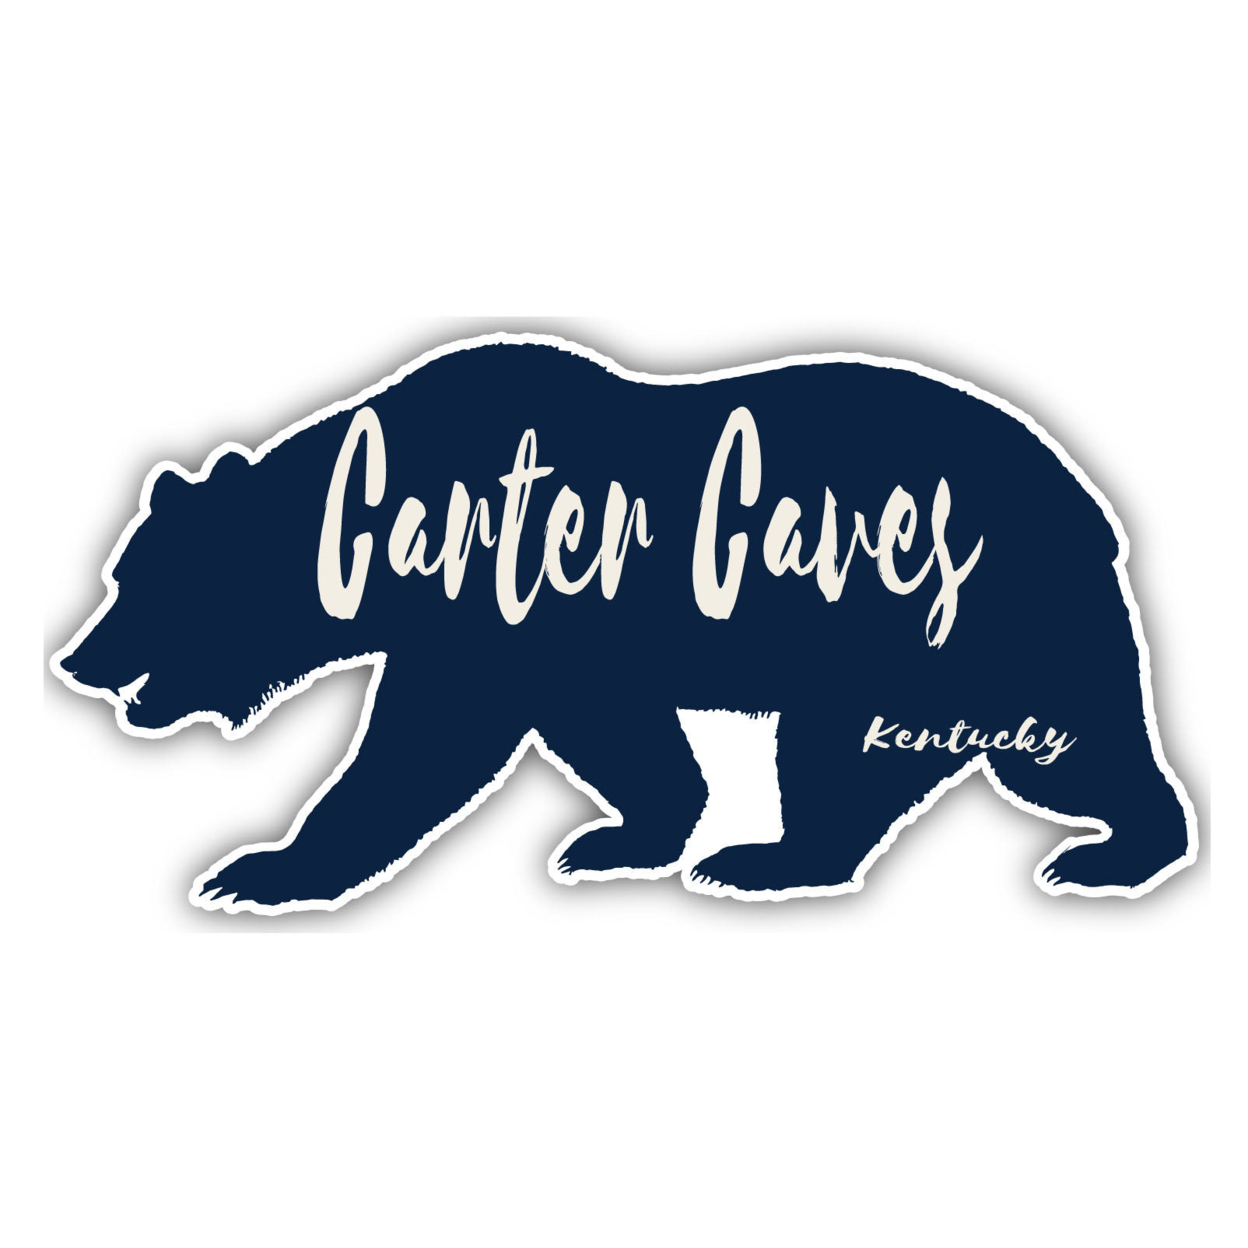 Carter Caves Kentucky Souvenir Decorative Stickers (Choose Theme And Size) - Single Unit, 12-Inch, Bear